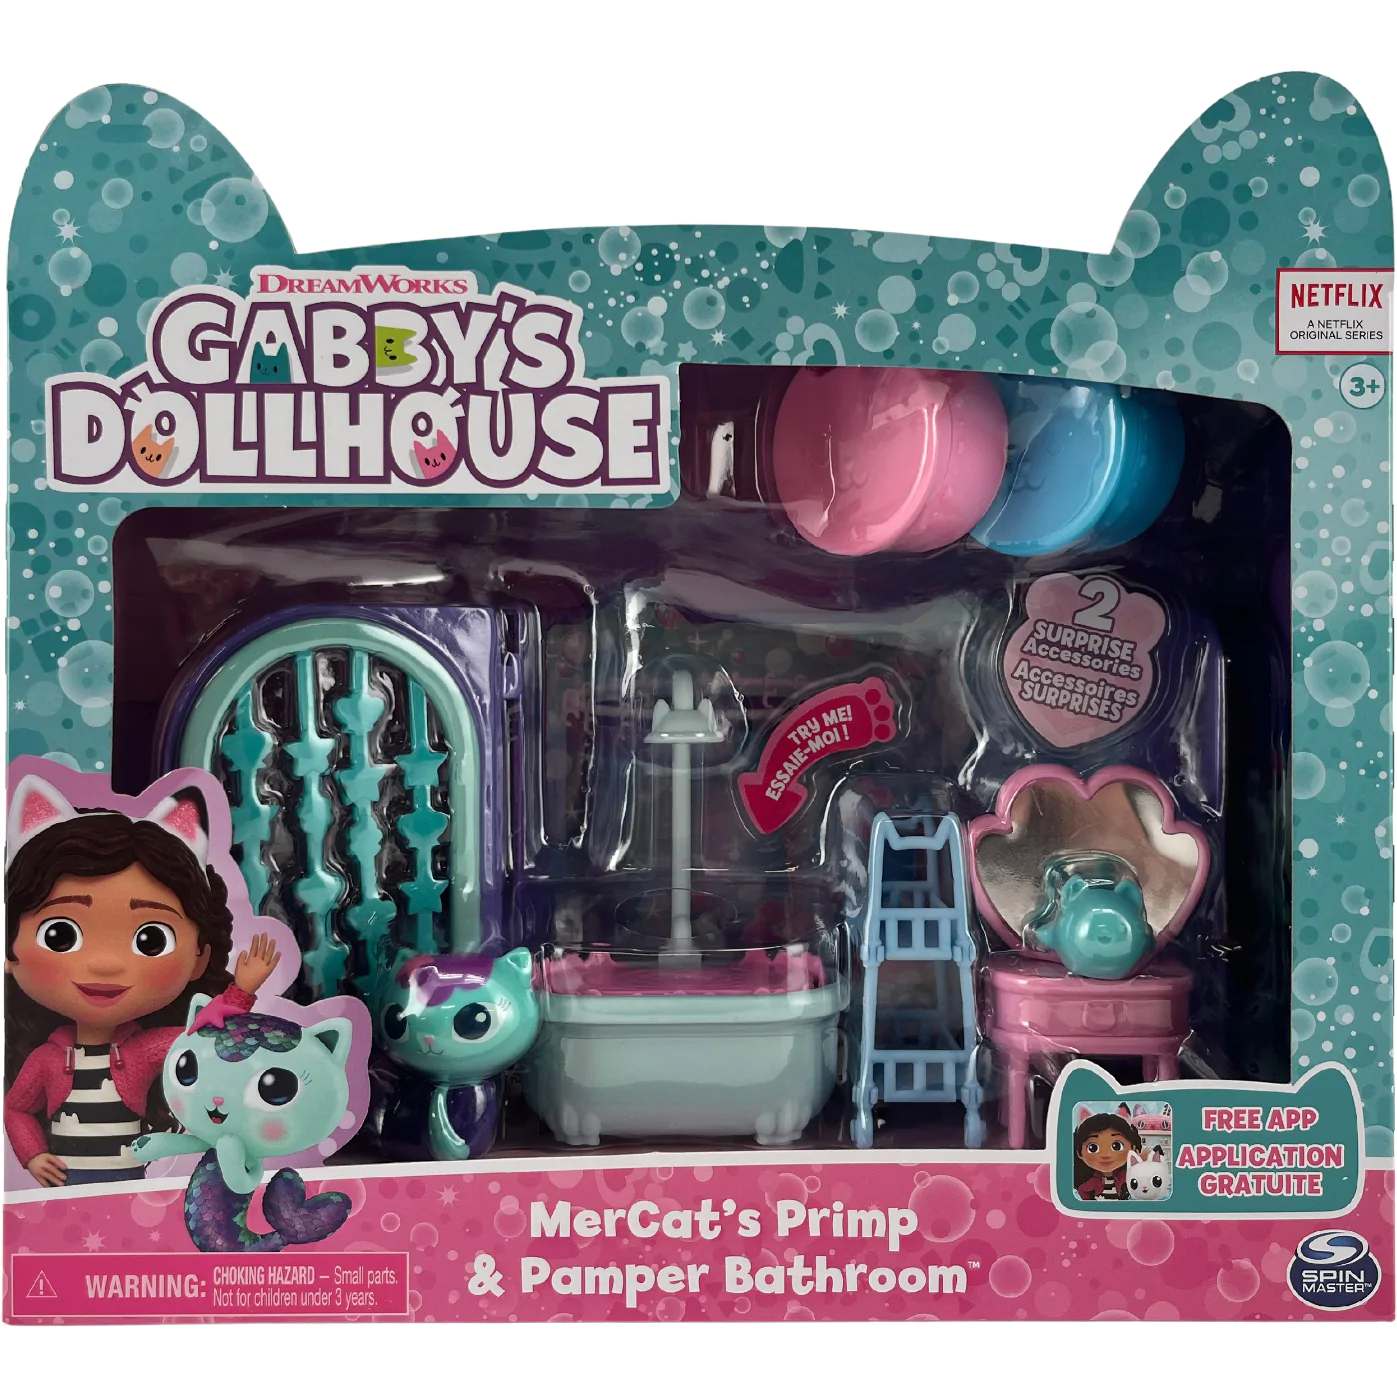 Gabby's Doll House MerCat's Primp & Pamper Bathroom / Spa Bathroom / Children's Toy